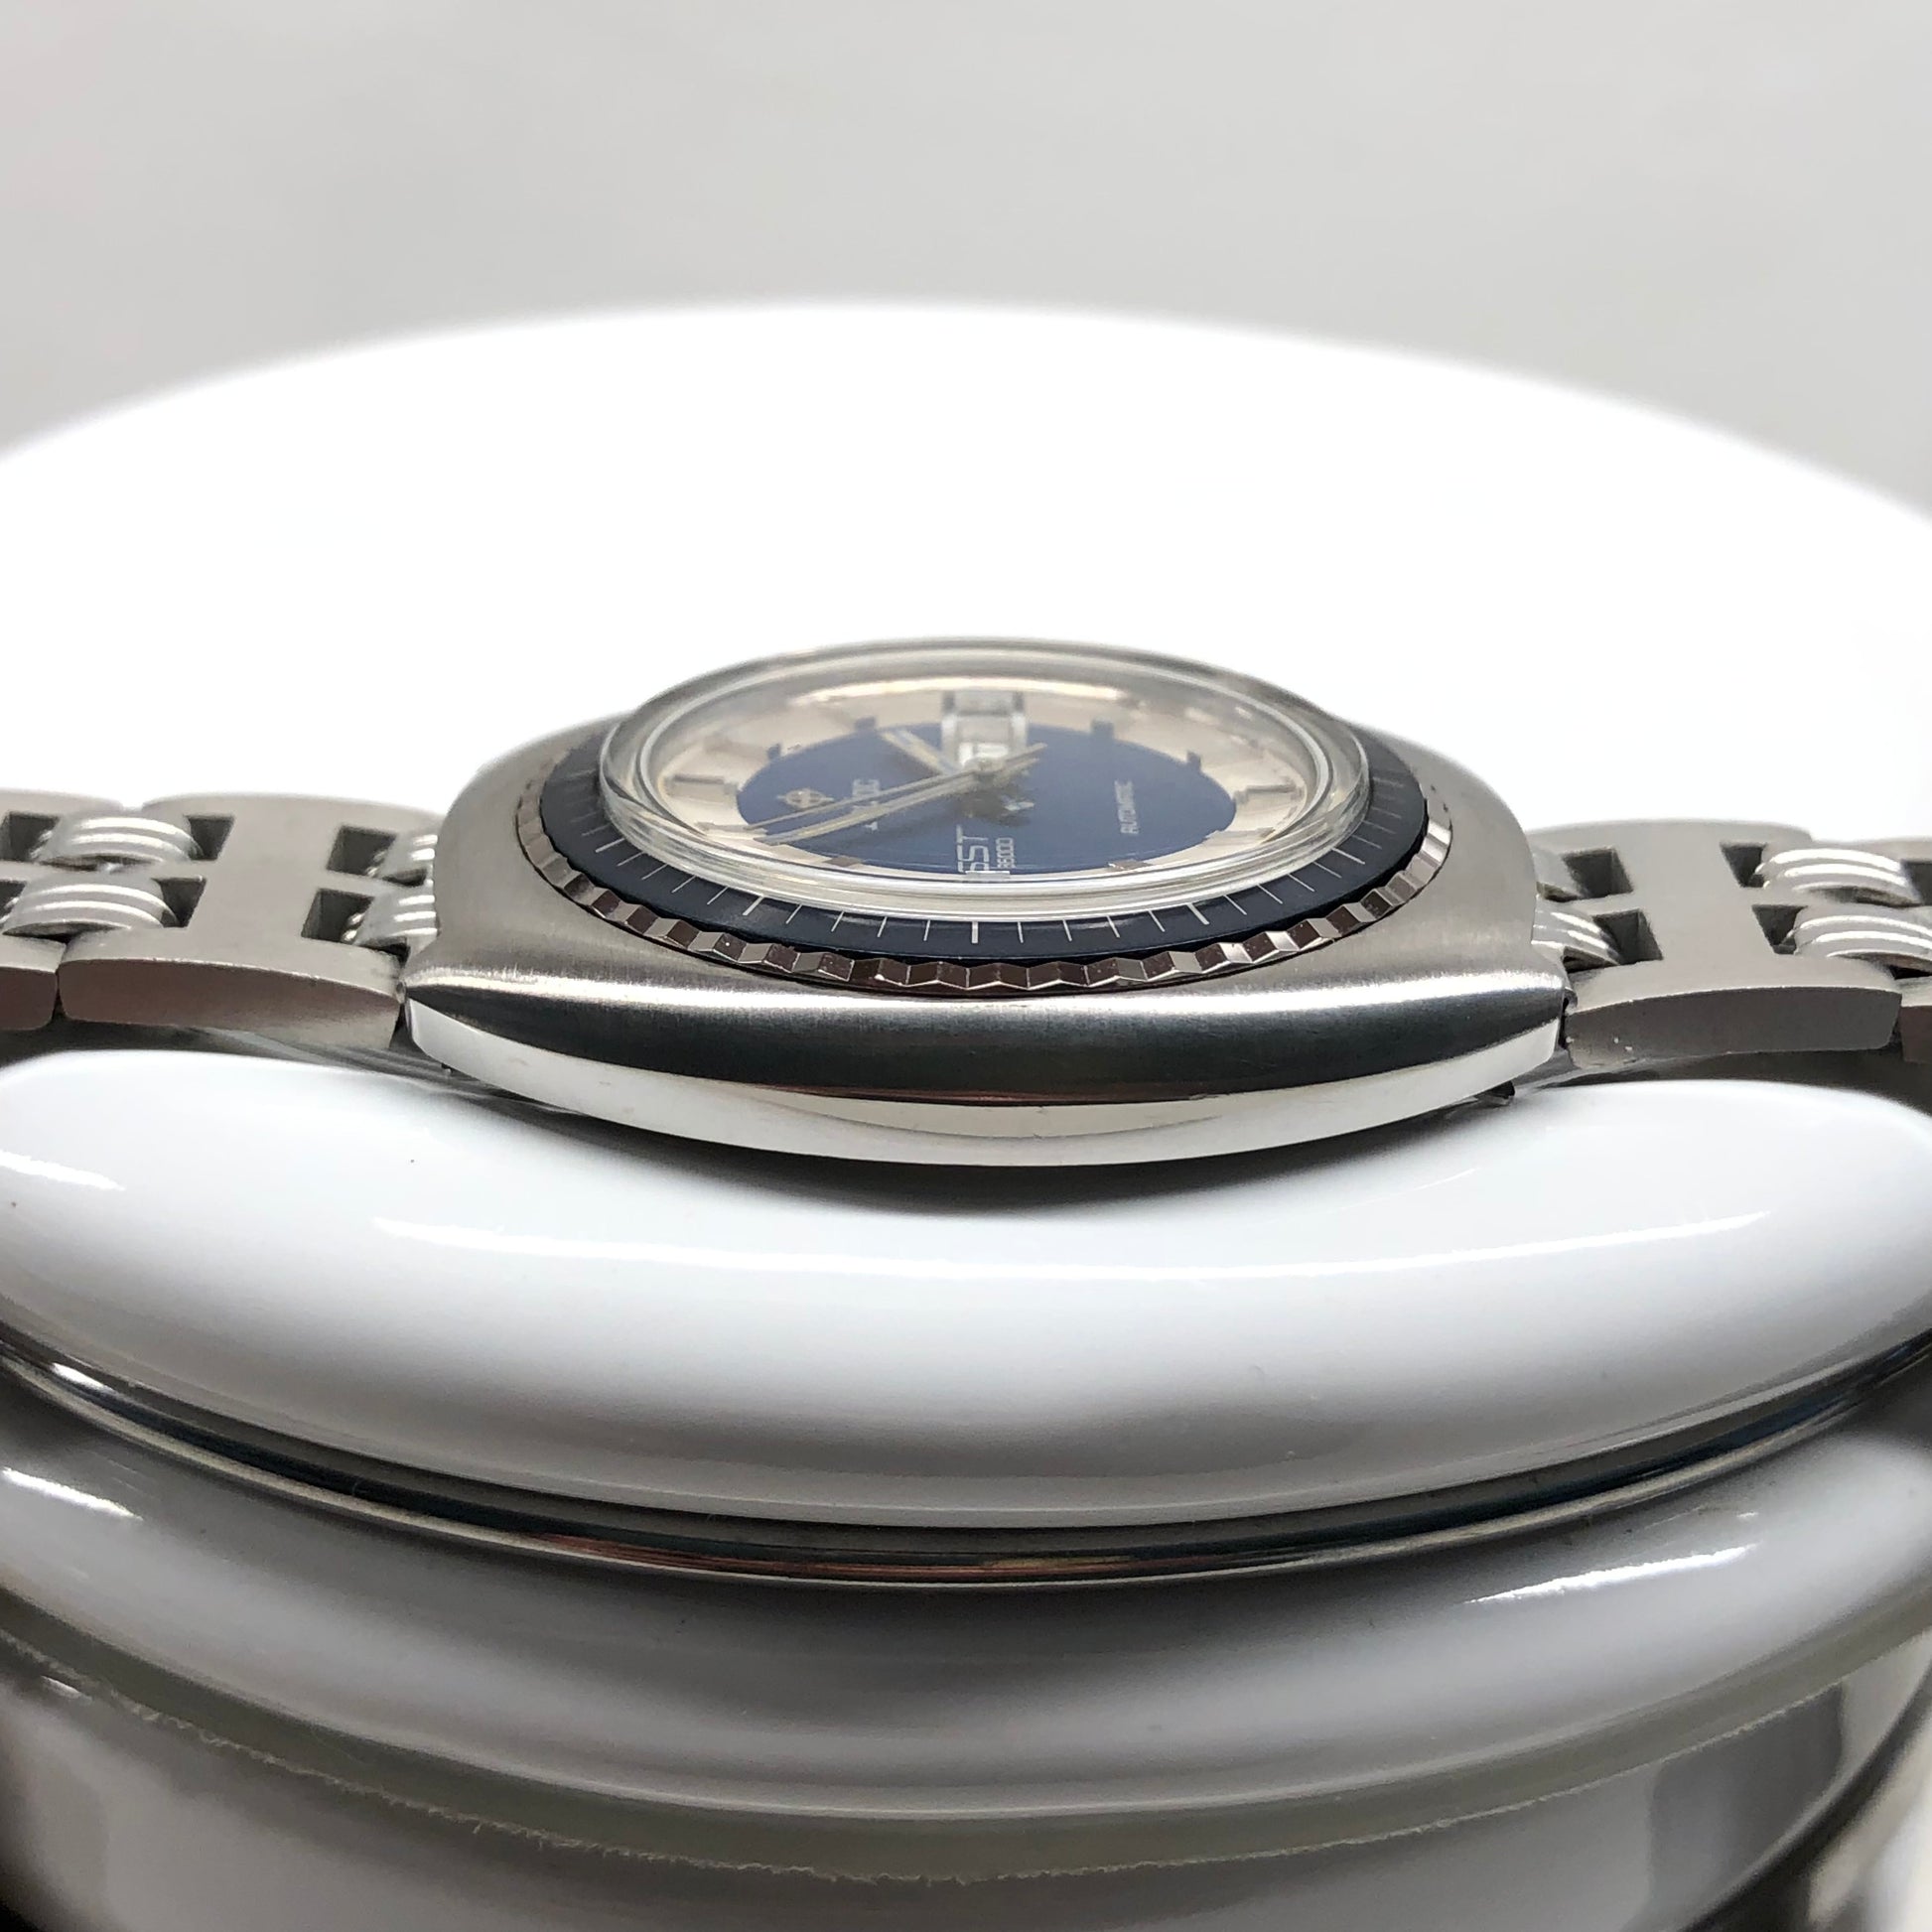 1970s Zodaic SST 36000 Blue 862 951 Vintage Automatic Wristwatch Old Stock - Hashtag Watch Company